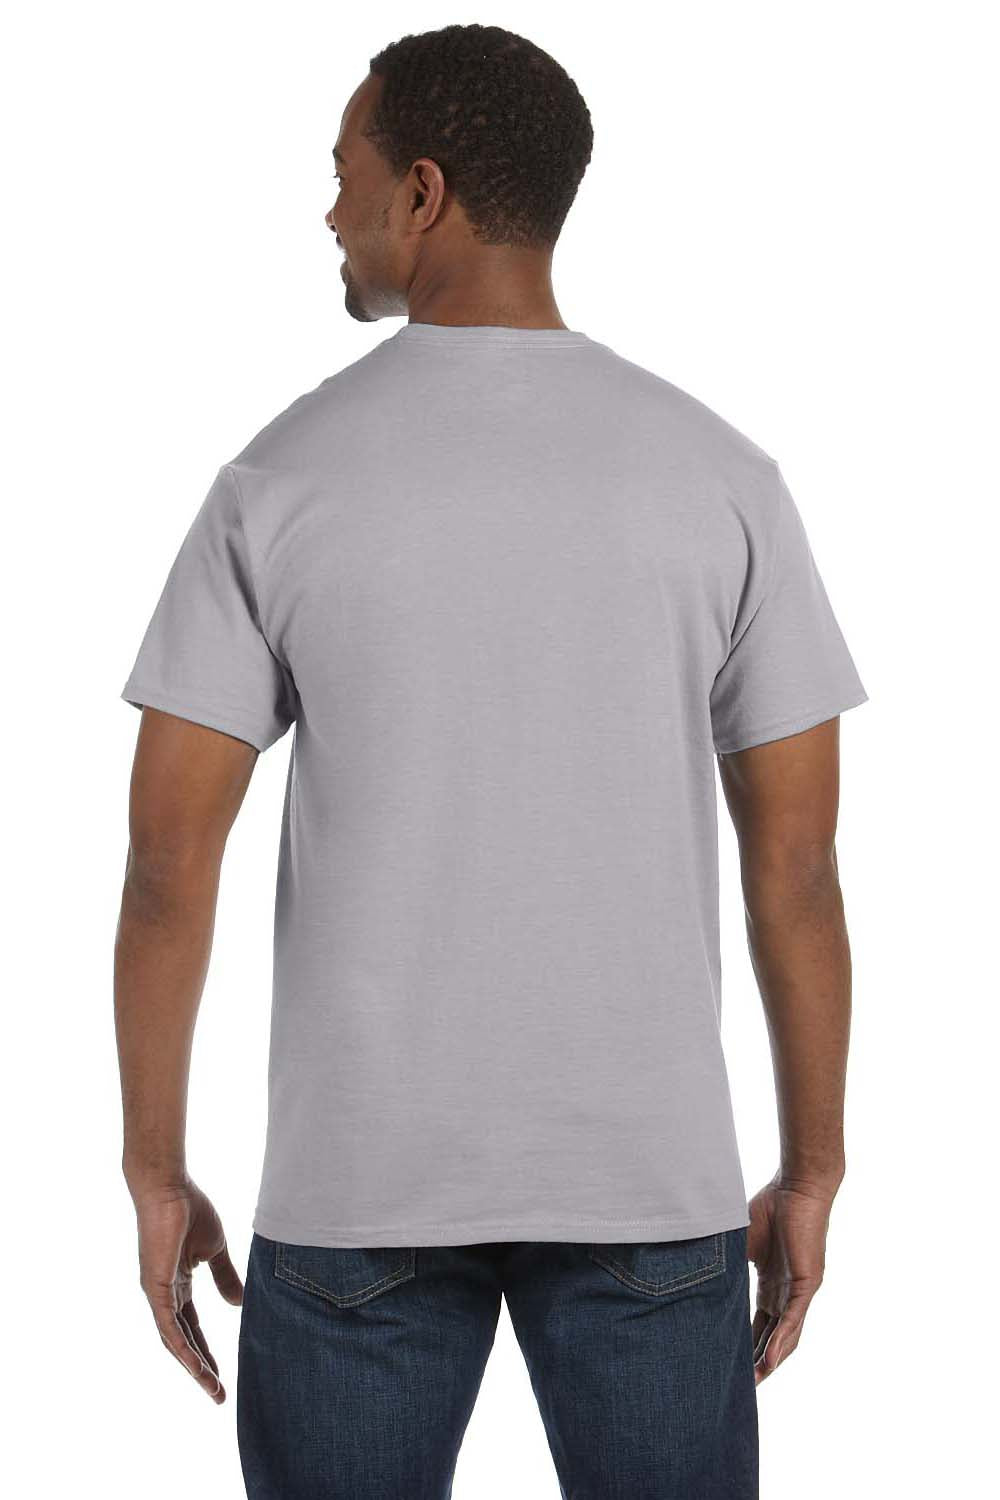 Hanes 5250T Mens ComfortSoft Short Sleeve Crewneck T-Shirt Oxford Grey Back